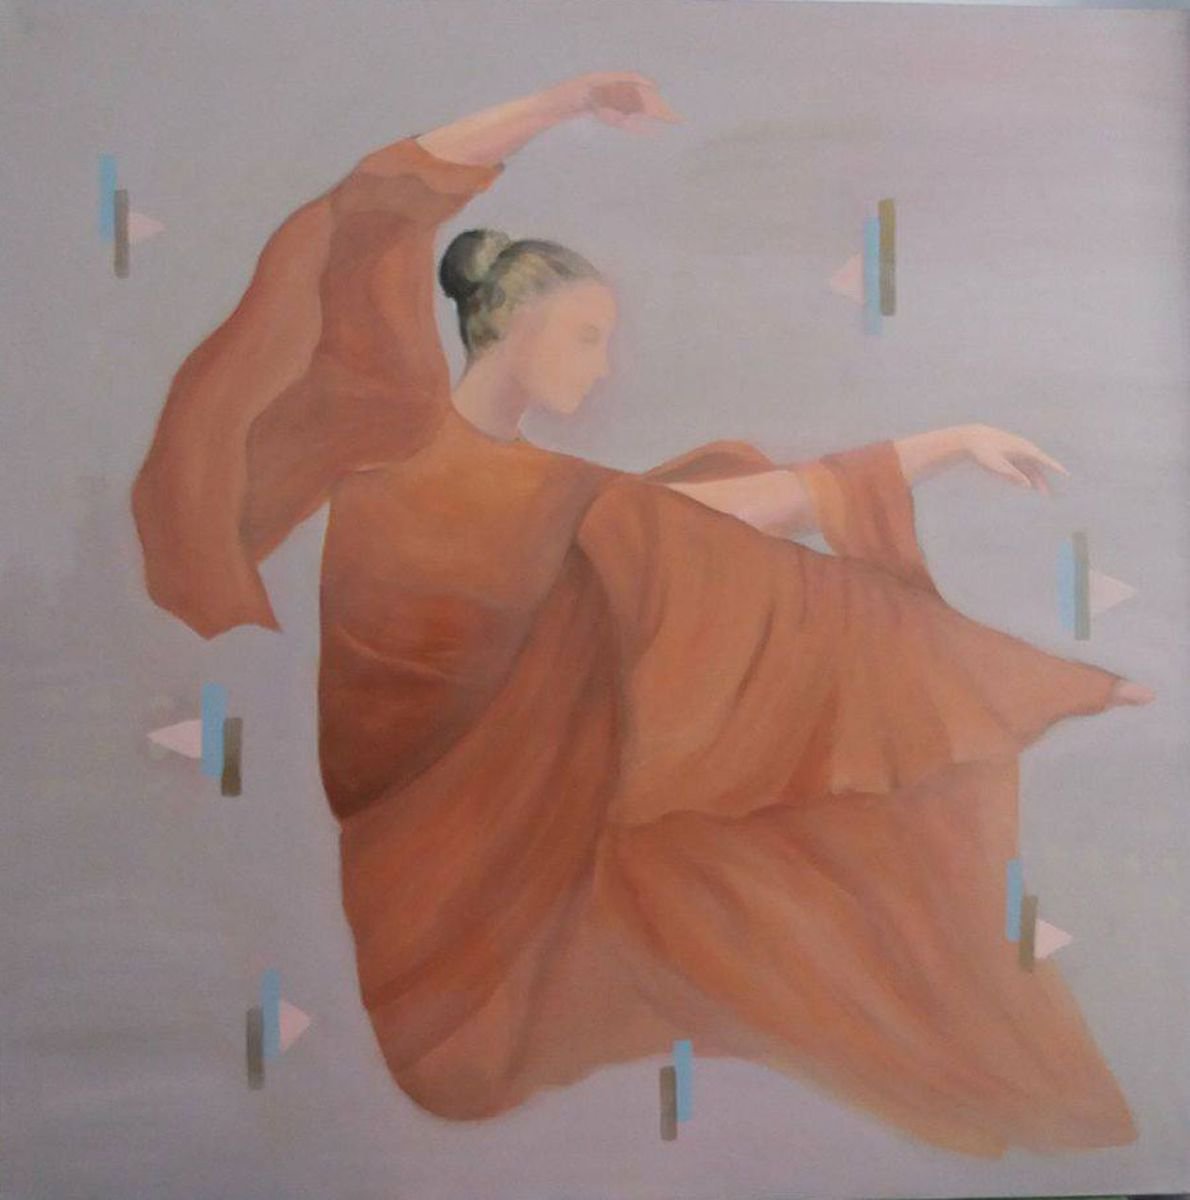 In dance II by Nadya Peovska